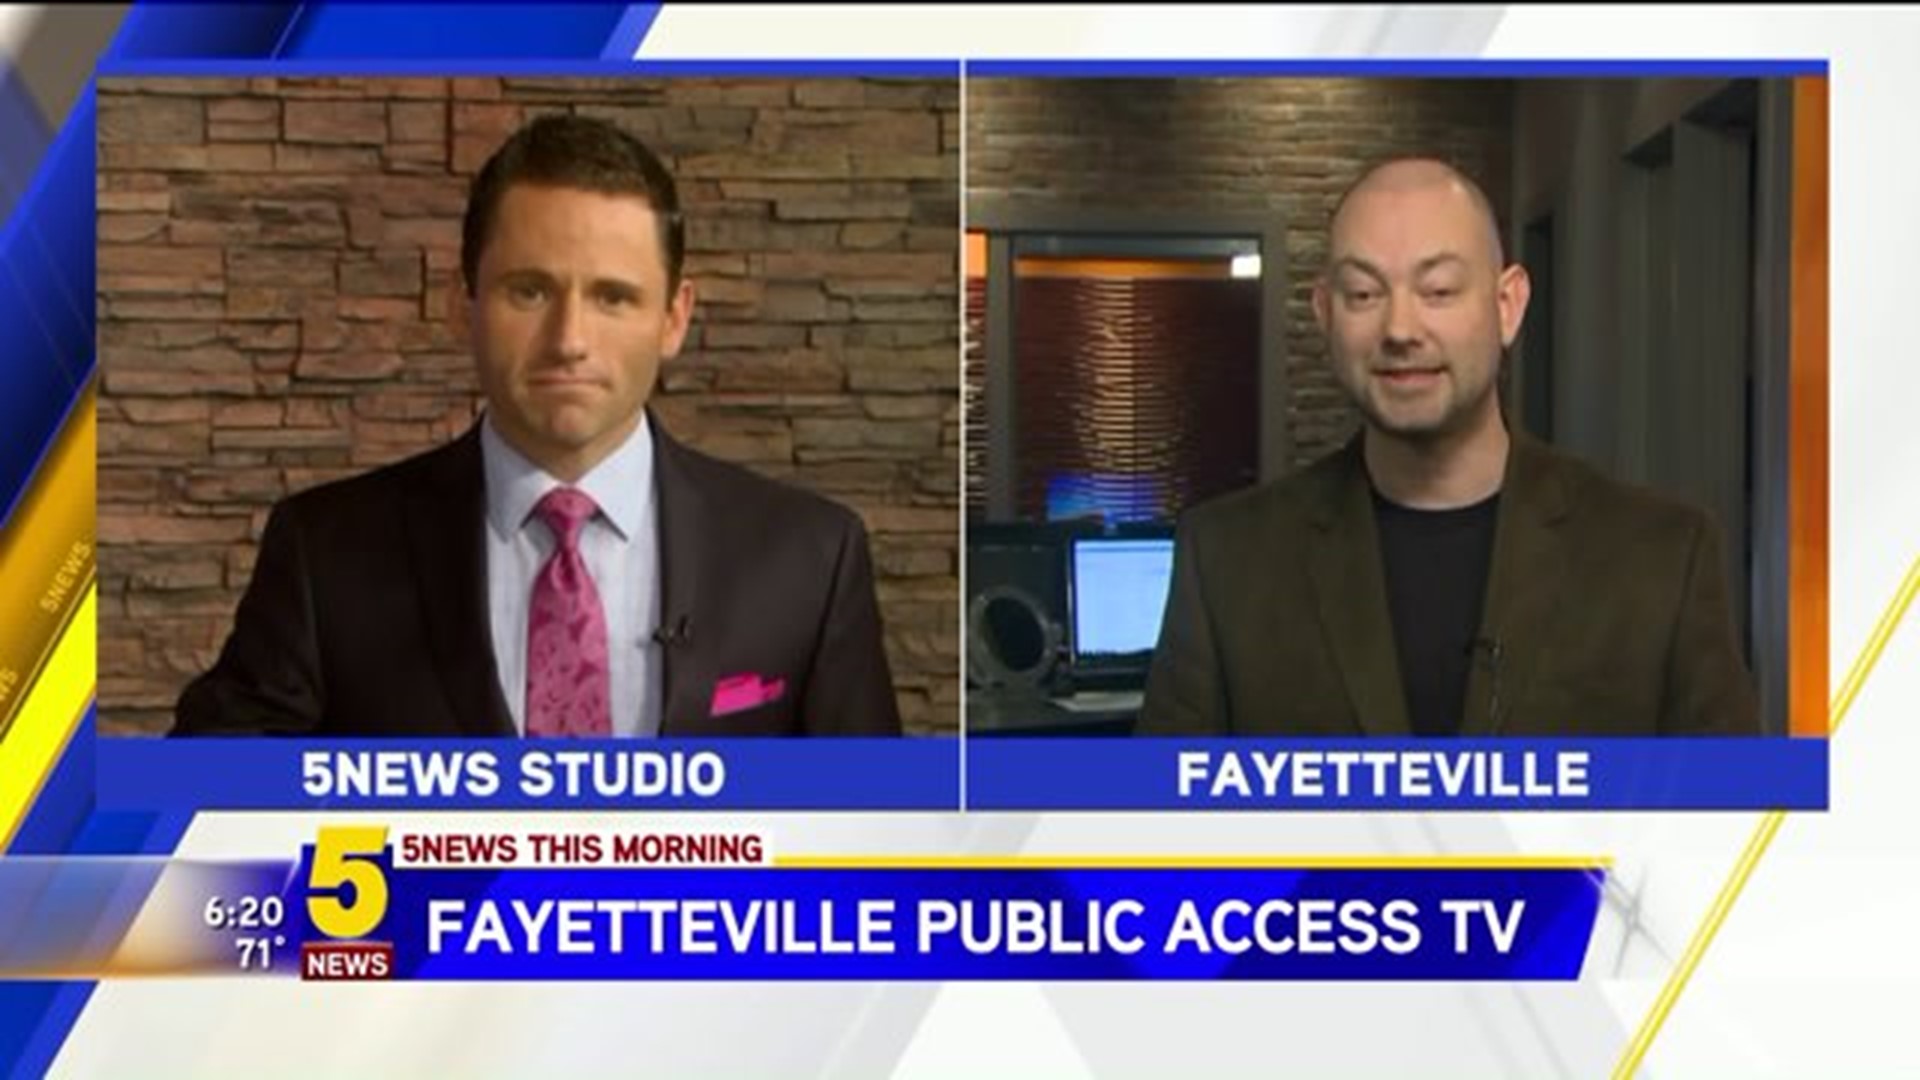 Fayetteville Public Access TV